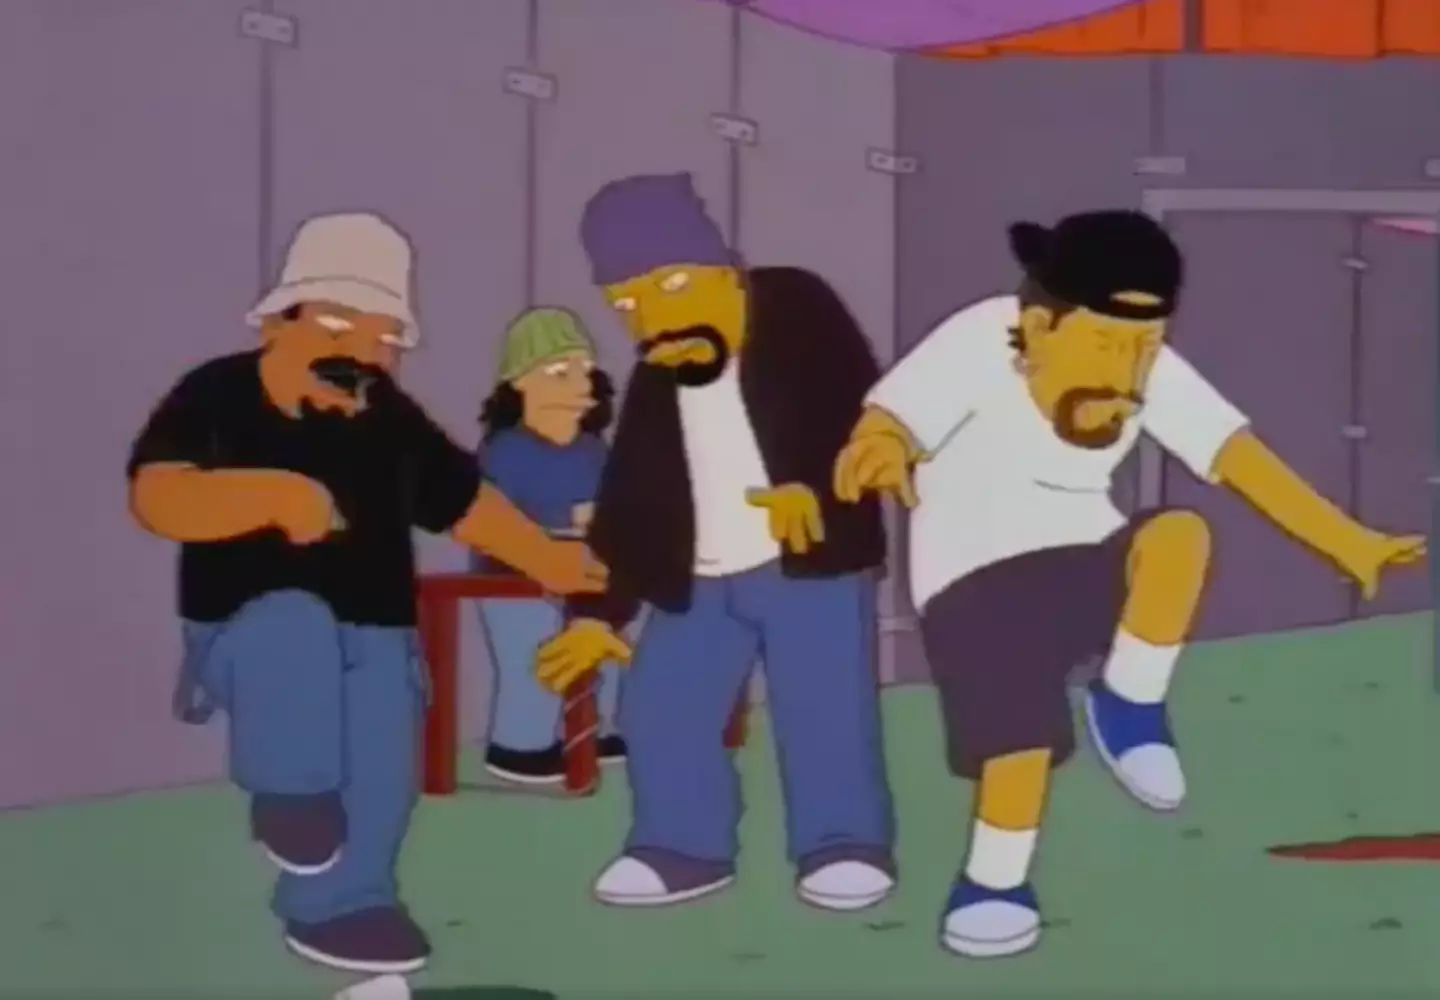 Cypress Hill as cartoons.